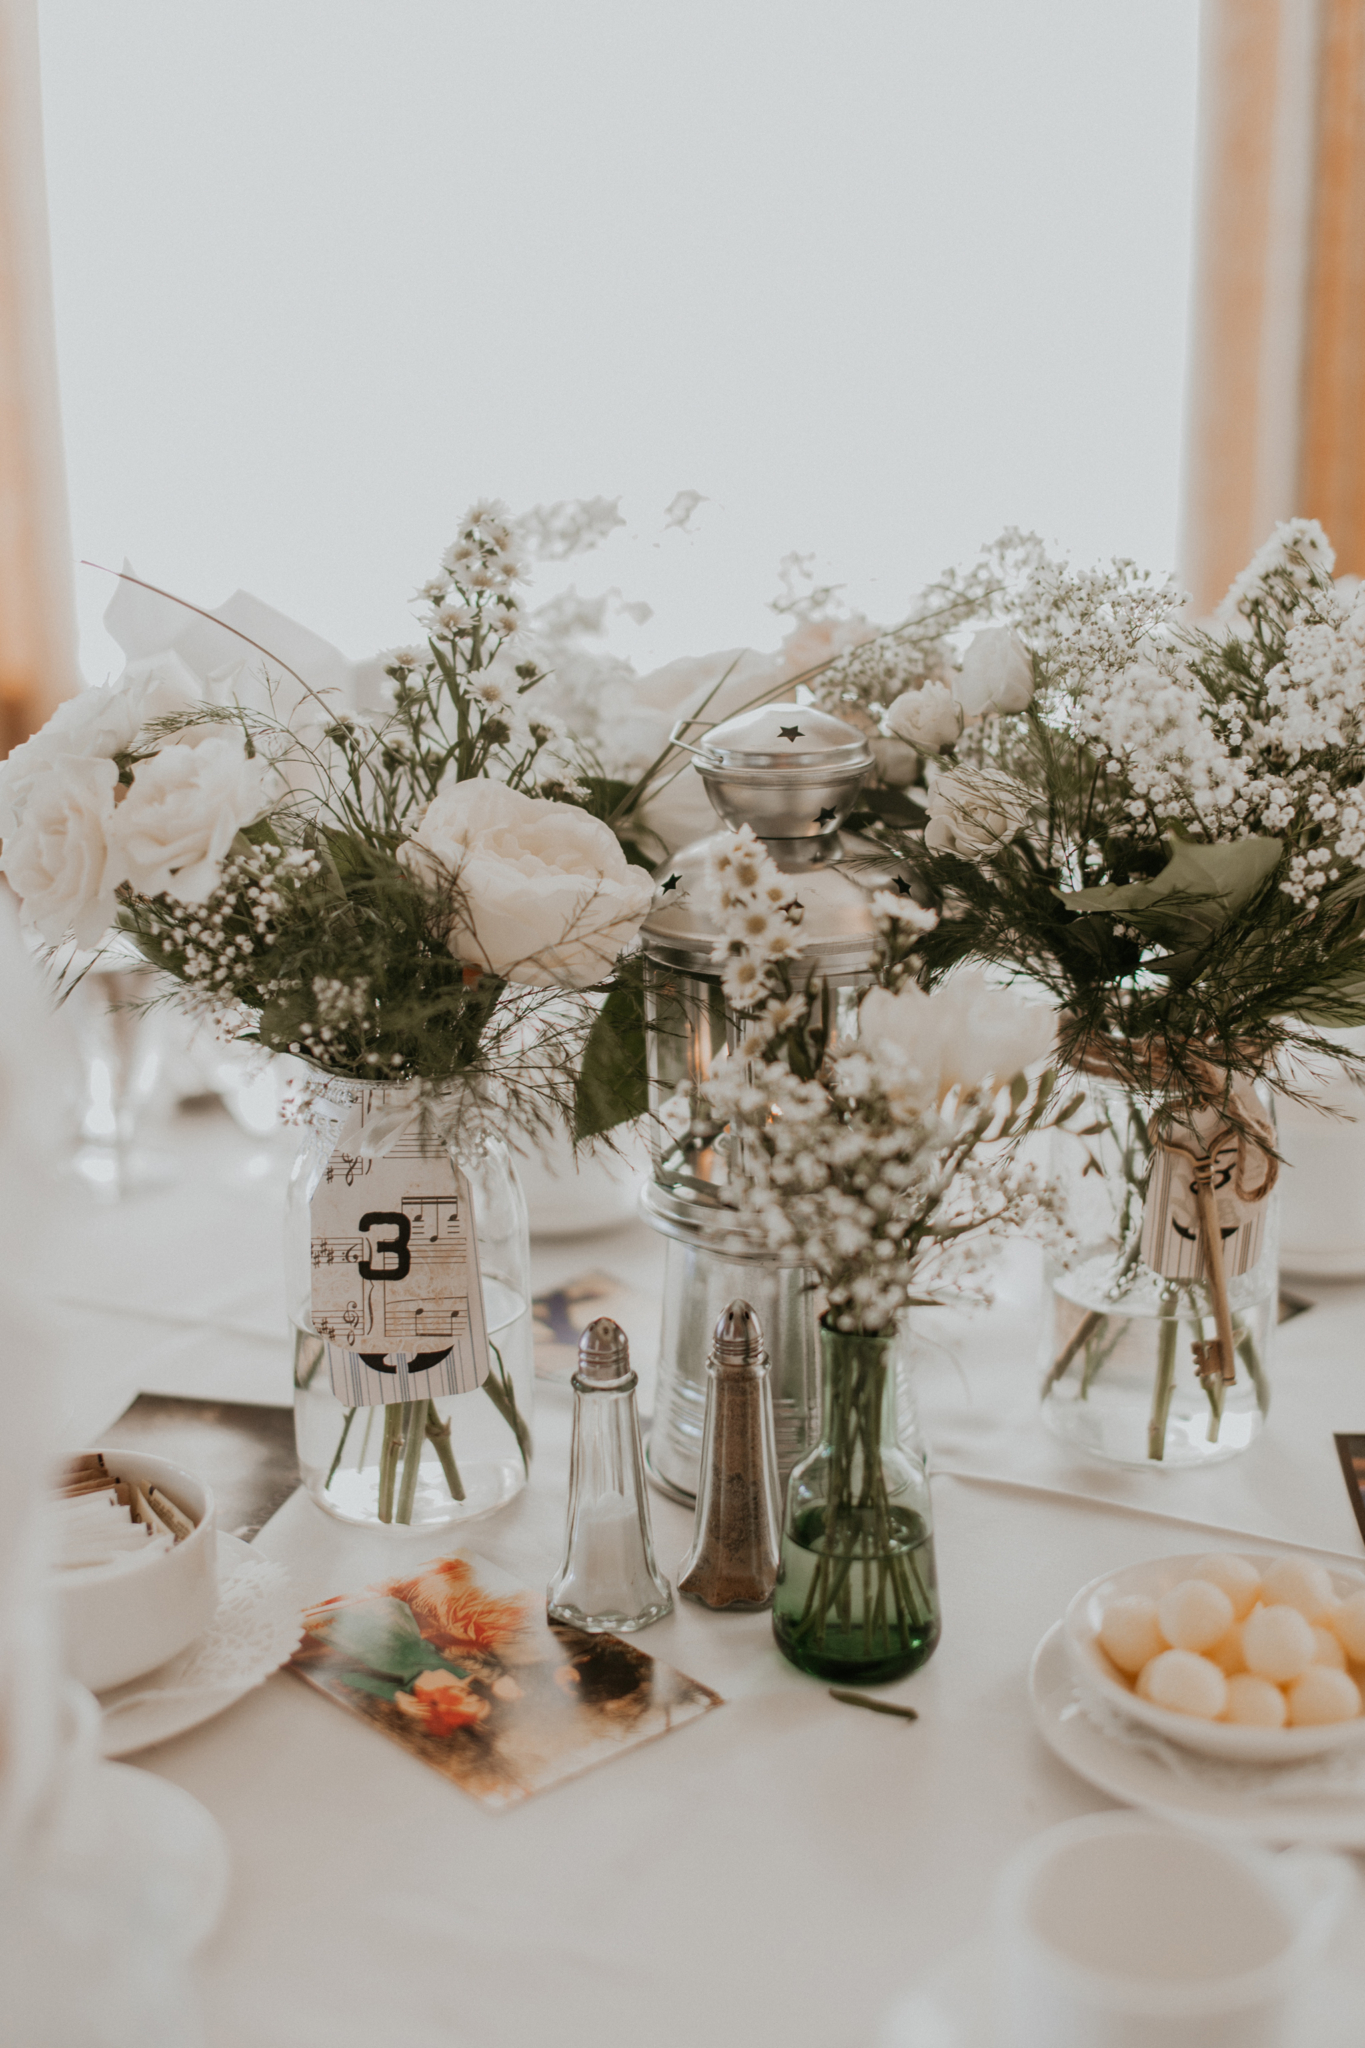 Table setting at wedding